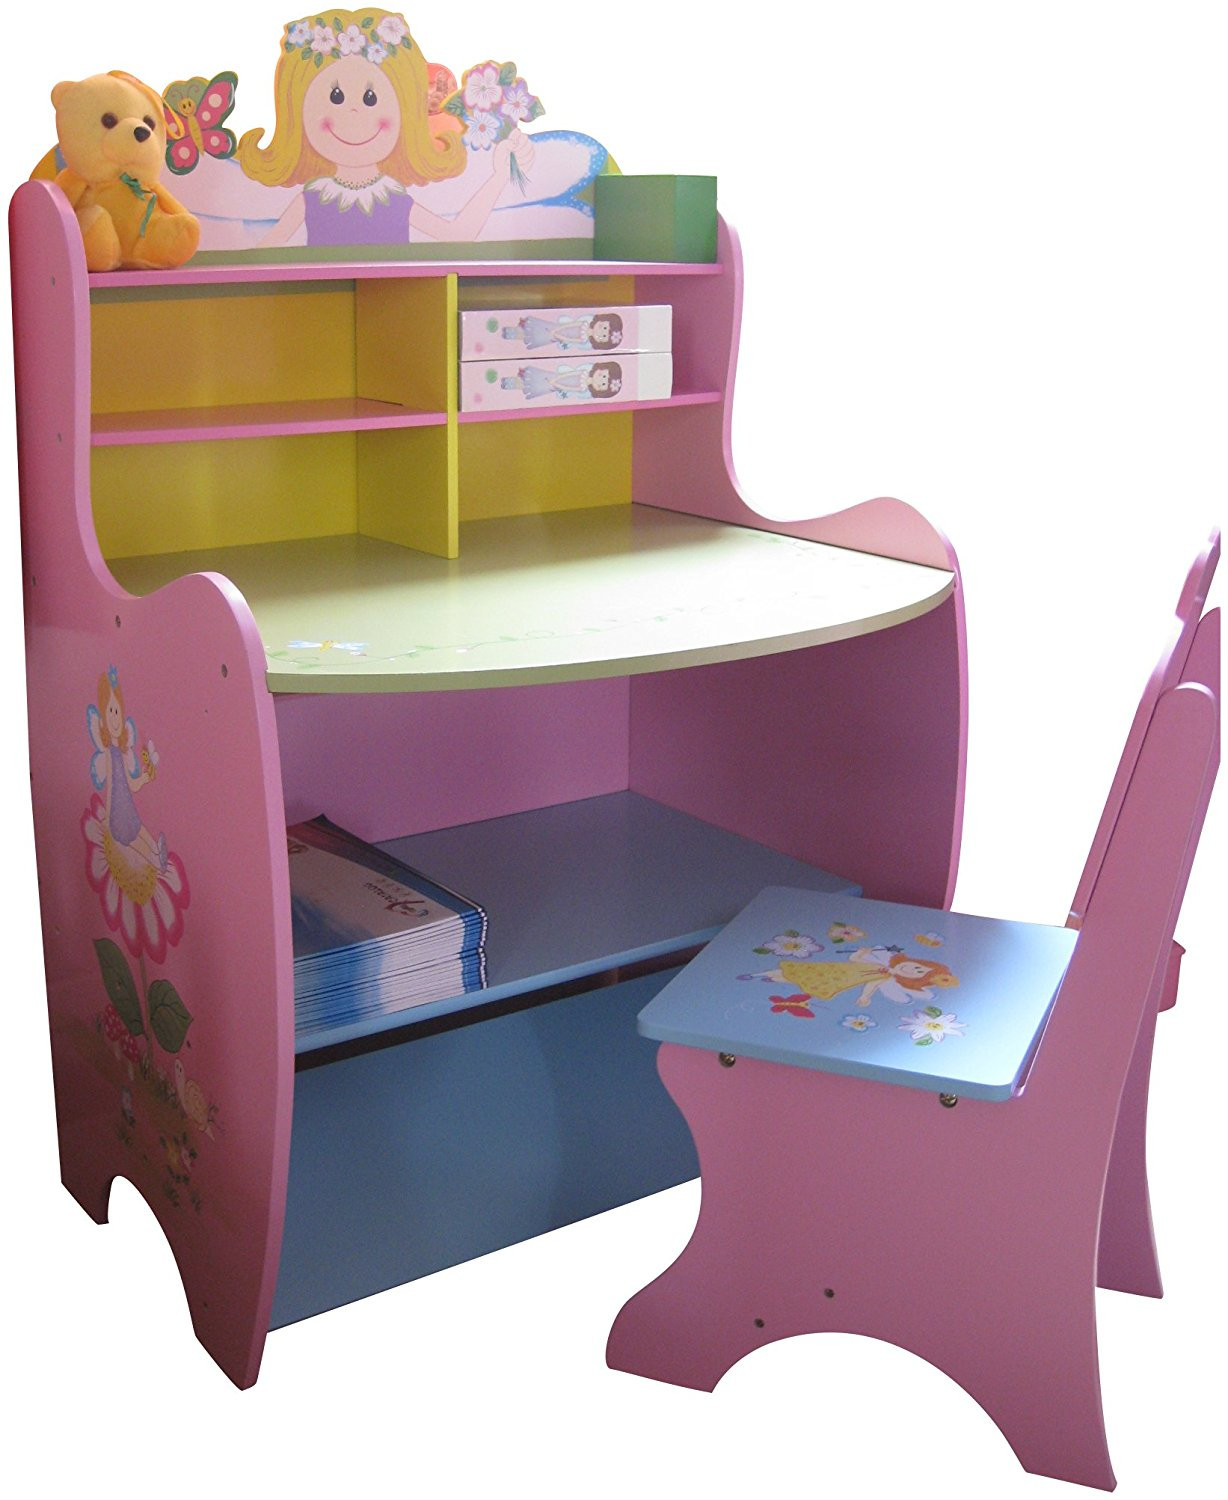 Kids Desk With Storage
 Childrens Desk Chair Wooden Writing Storage Fairy Bedroom